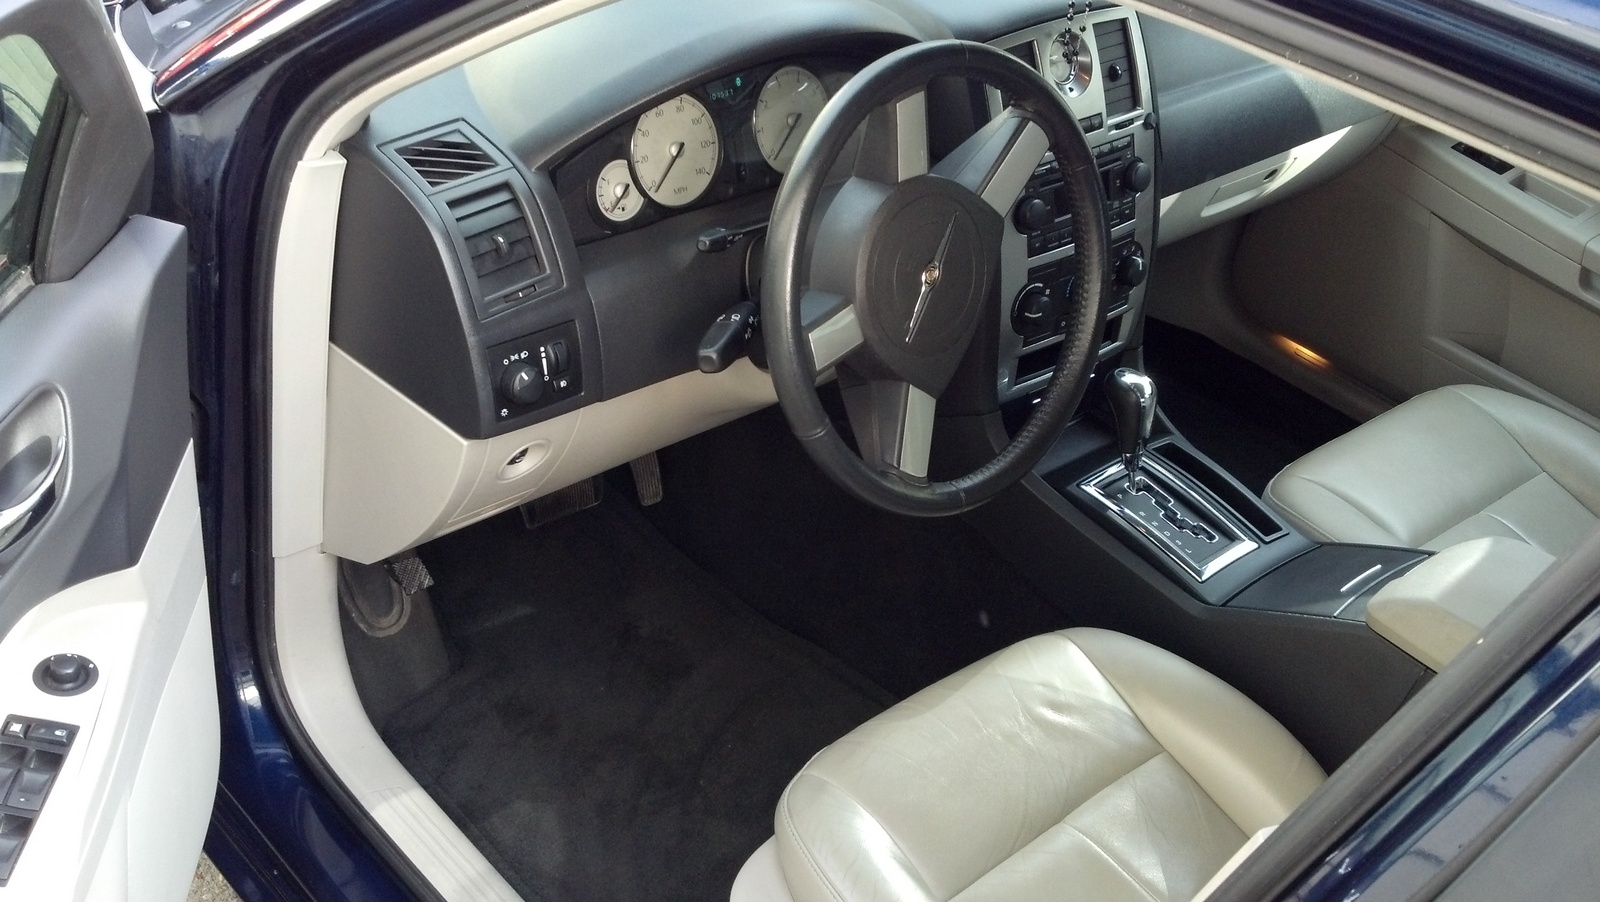 2012 Chrysler 300 colors #4